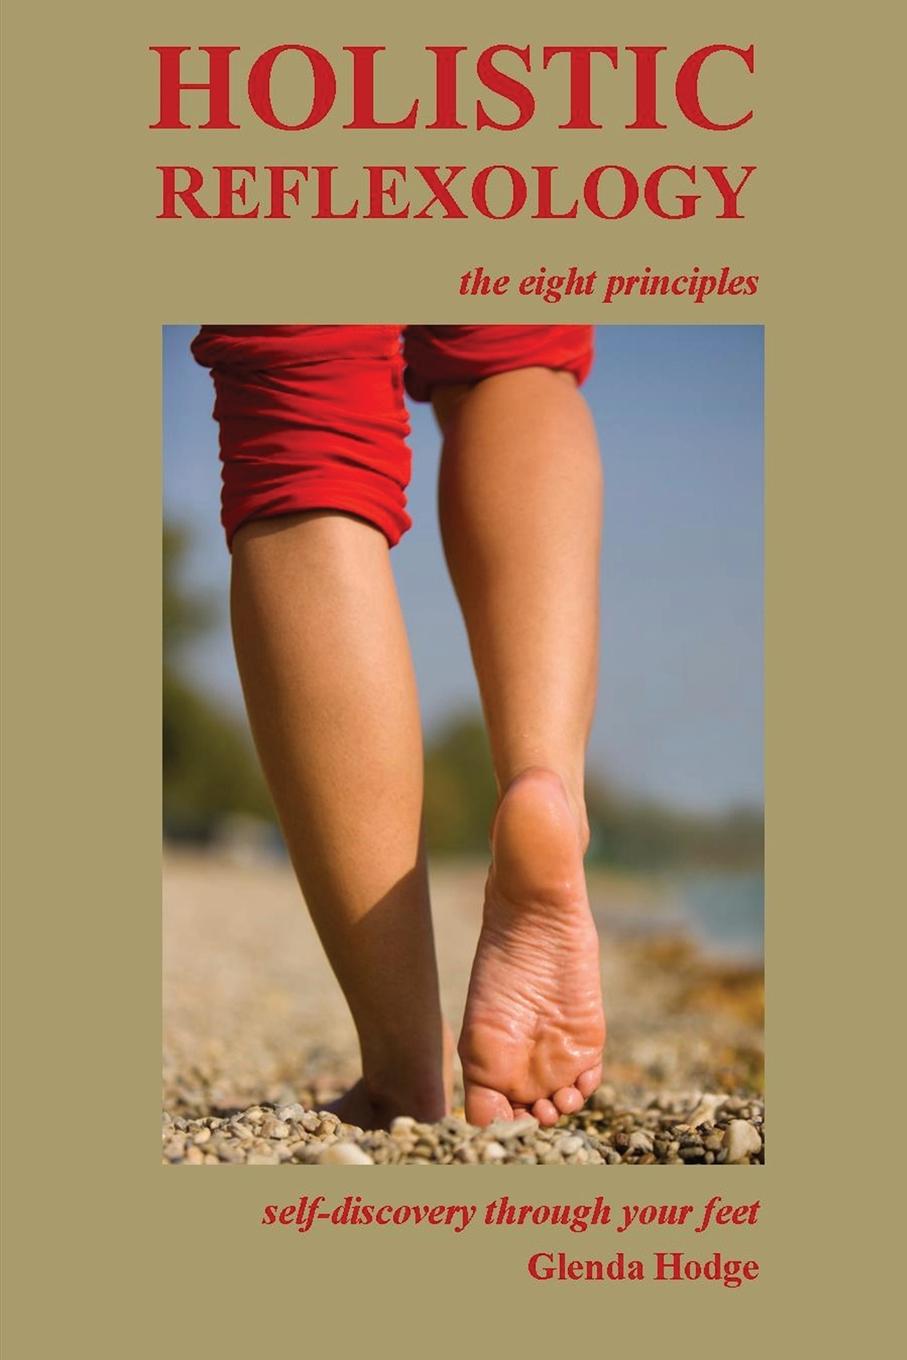 Glenda Hodge Holistic Reflexology, the eight principles